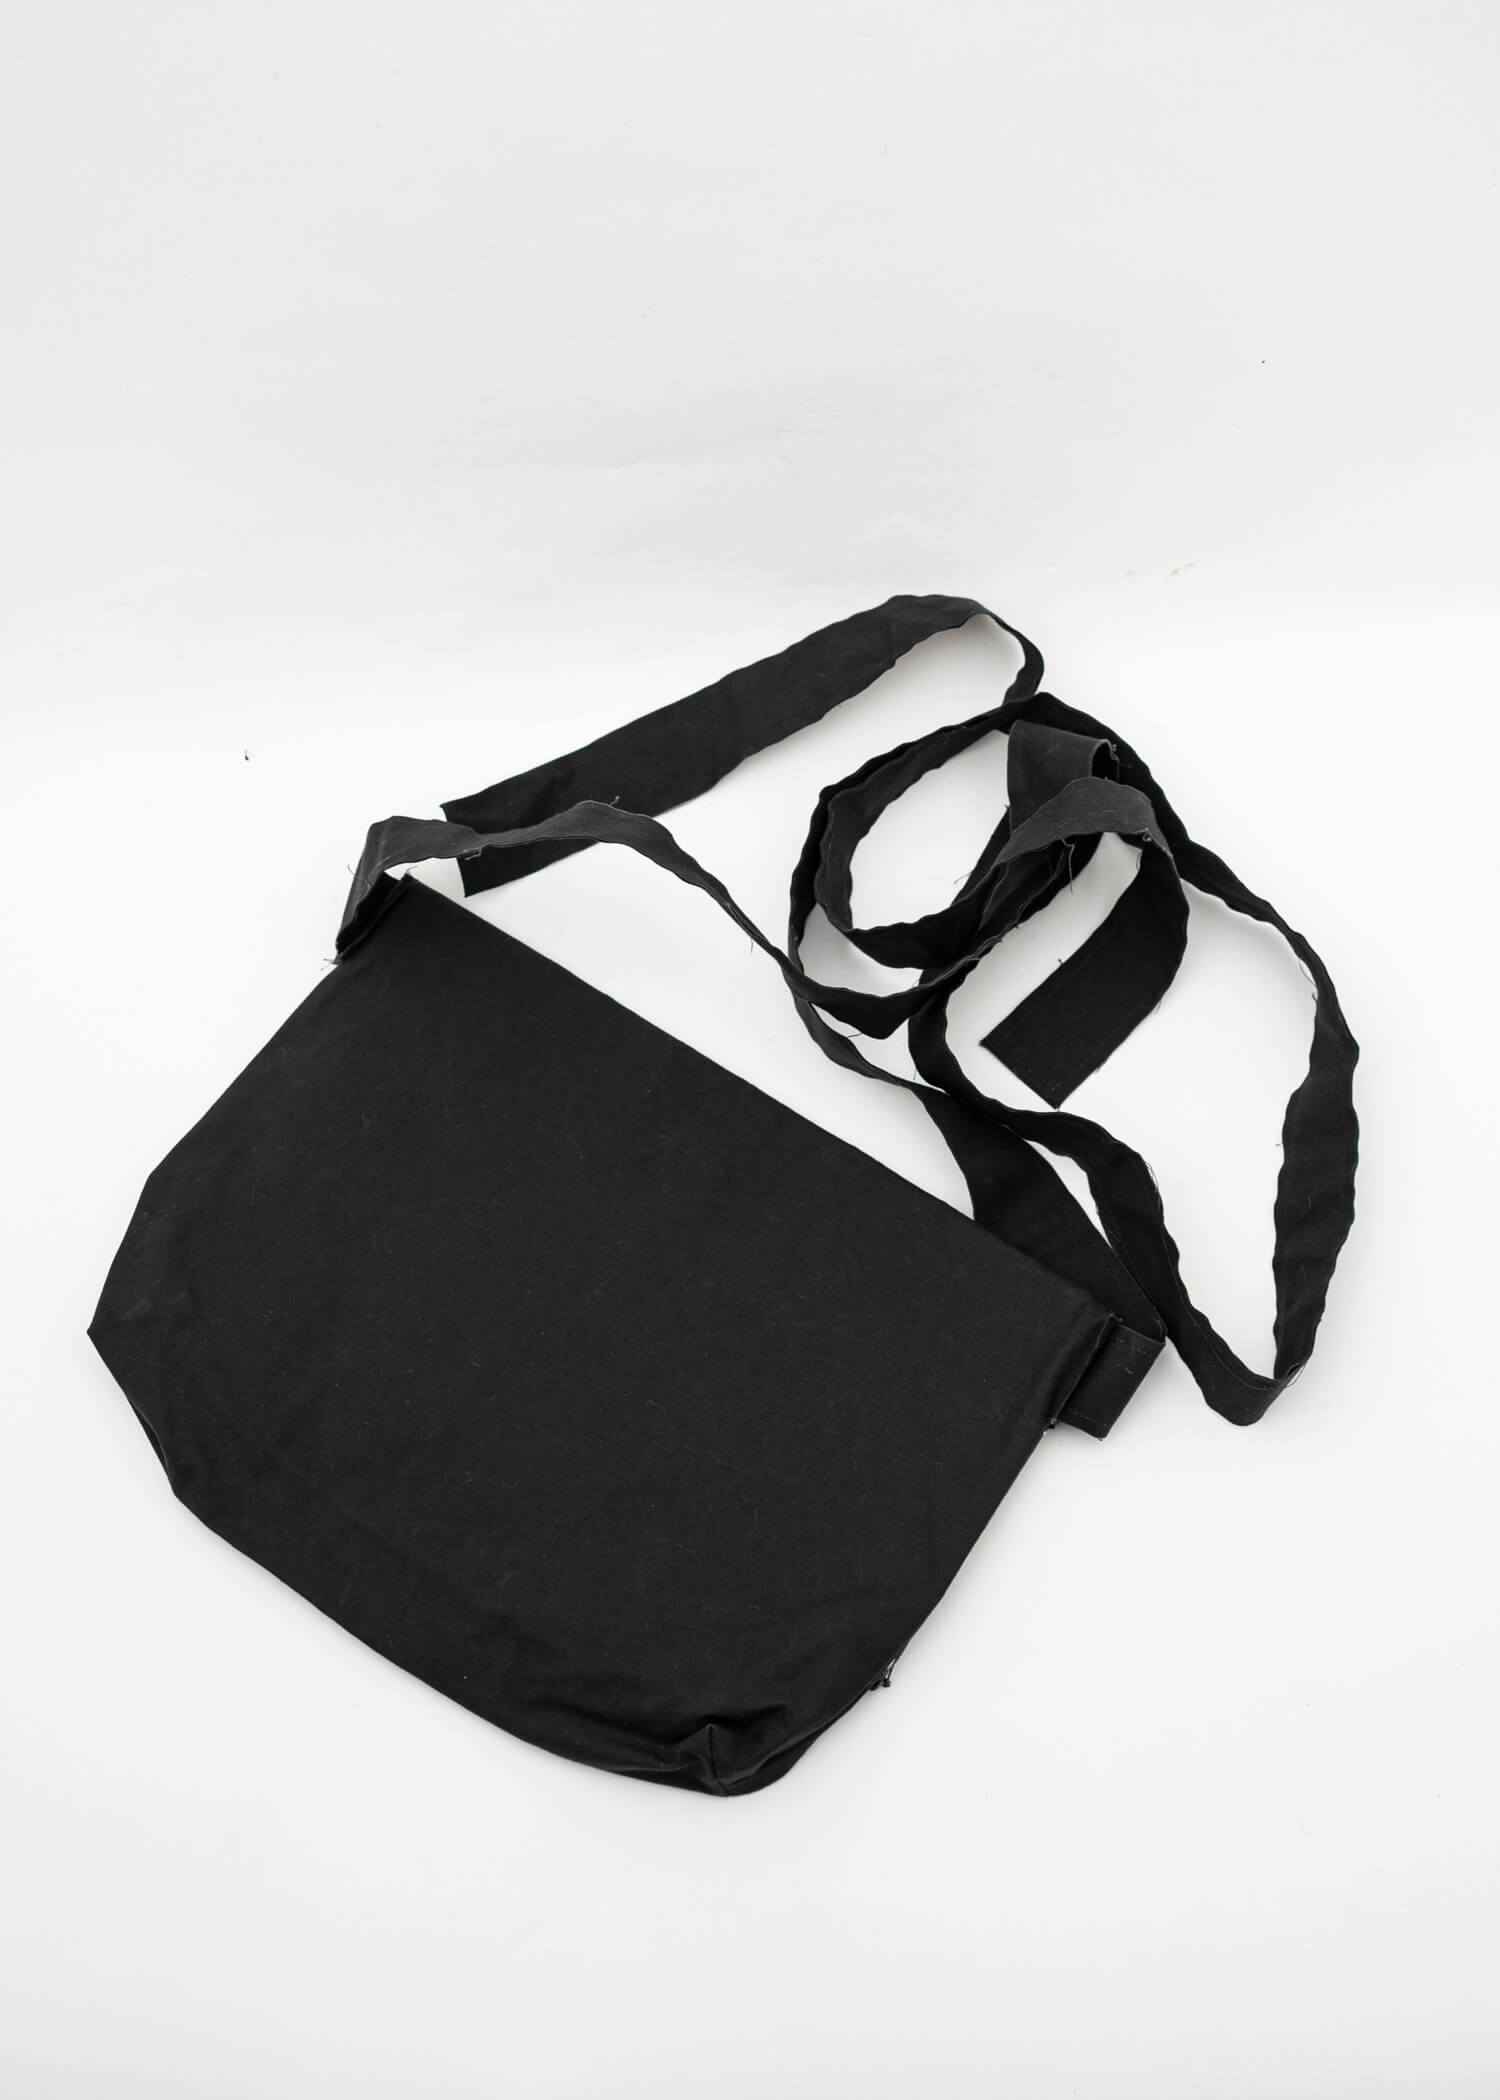 SCHA Art#1654 Double Bottom Shoulder Bag Small / Black